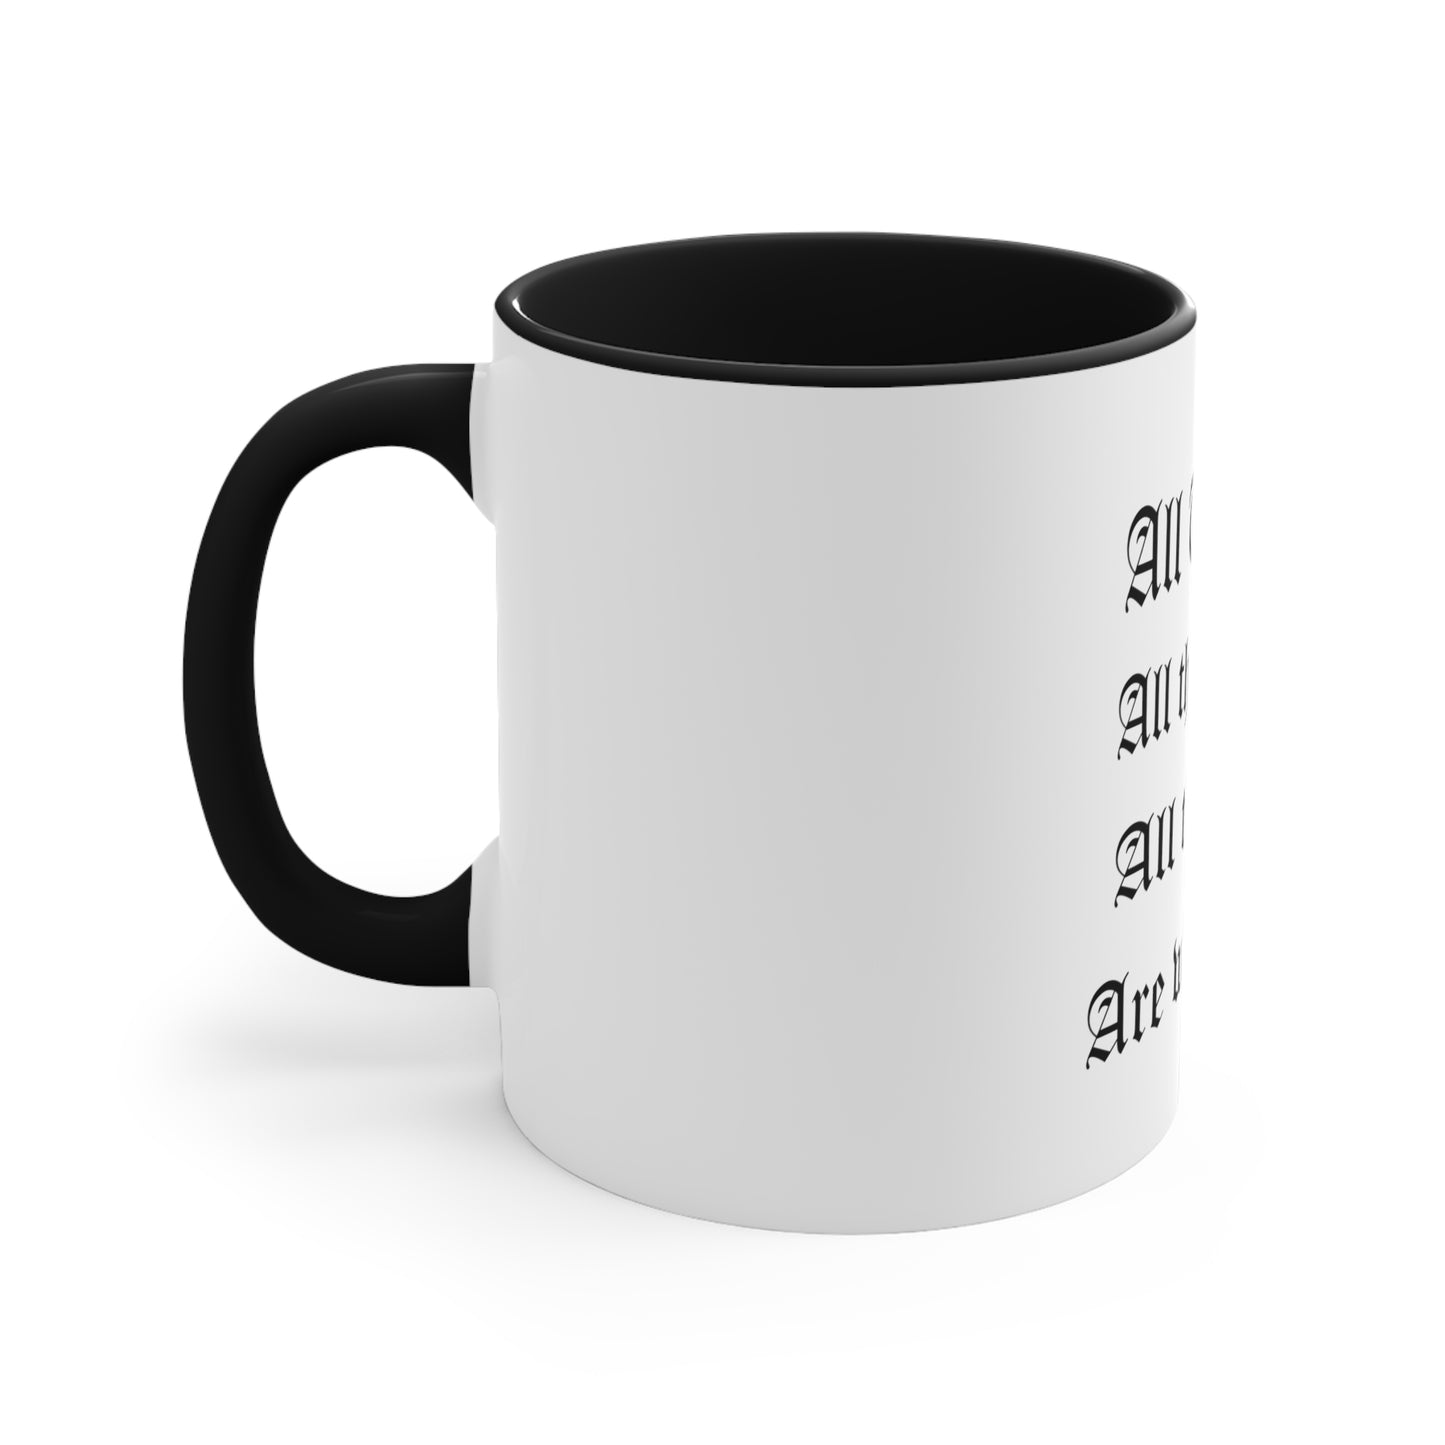 All the Gods Accent Coffee Mug, 11oz